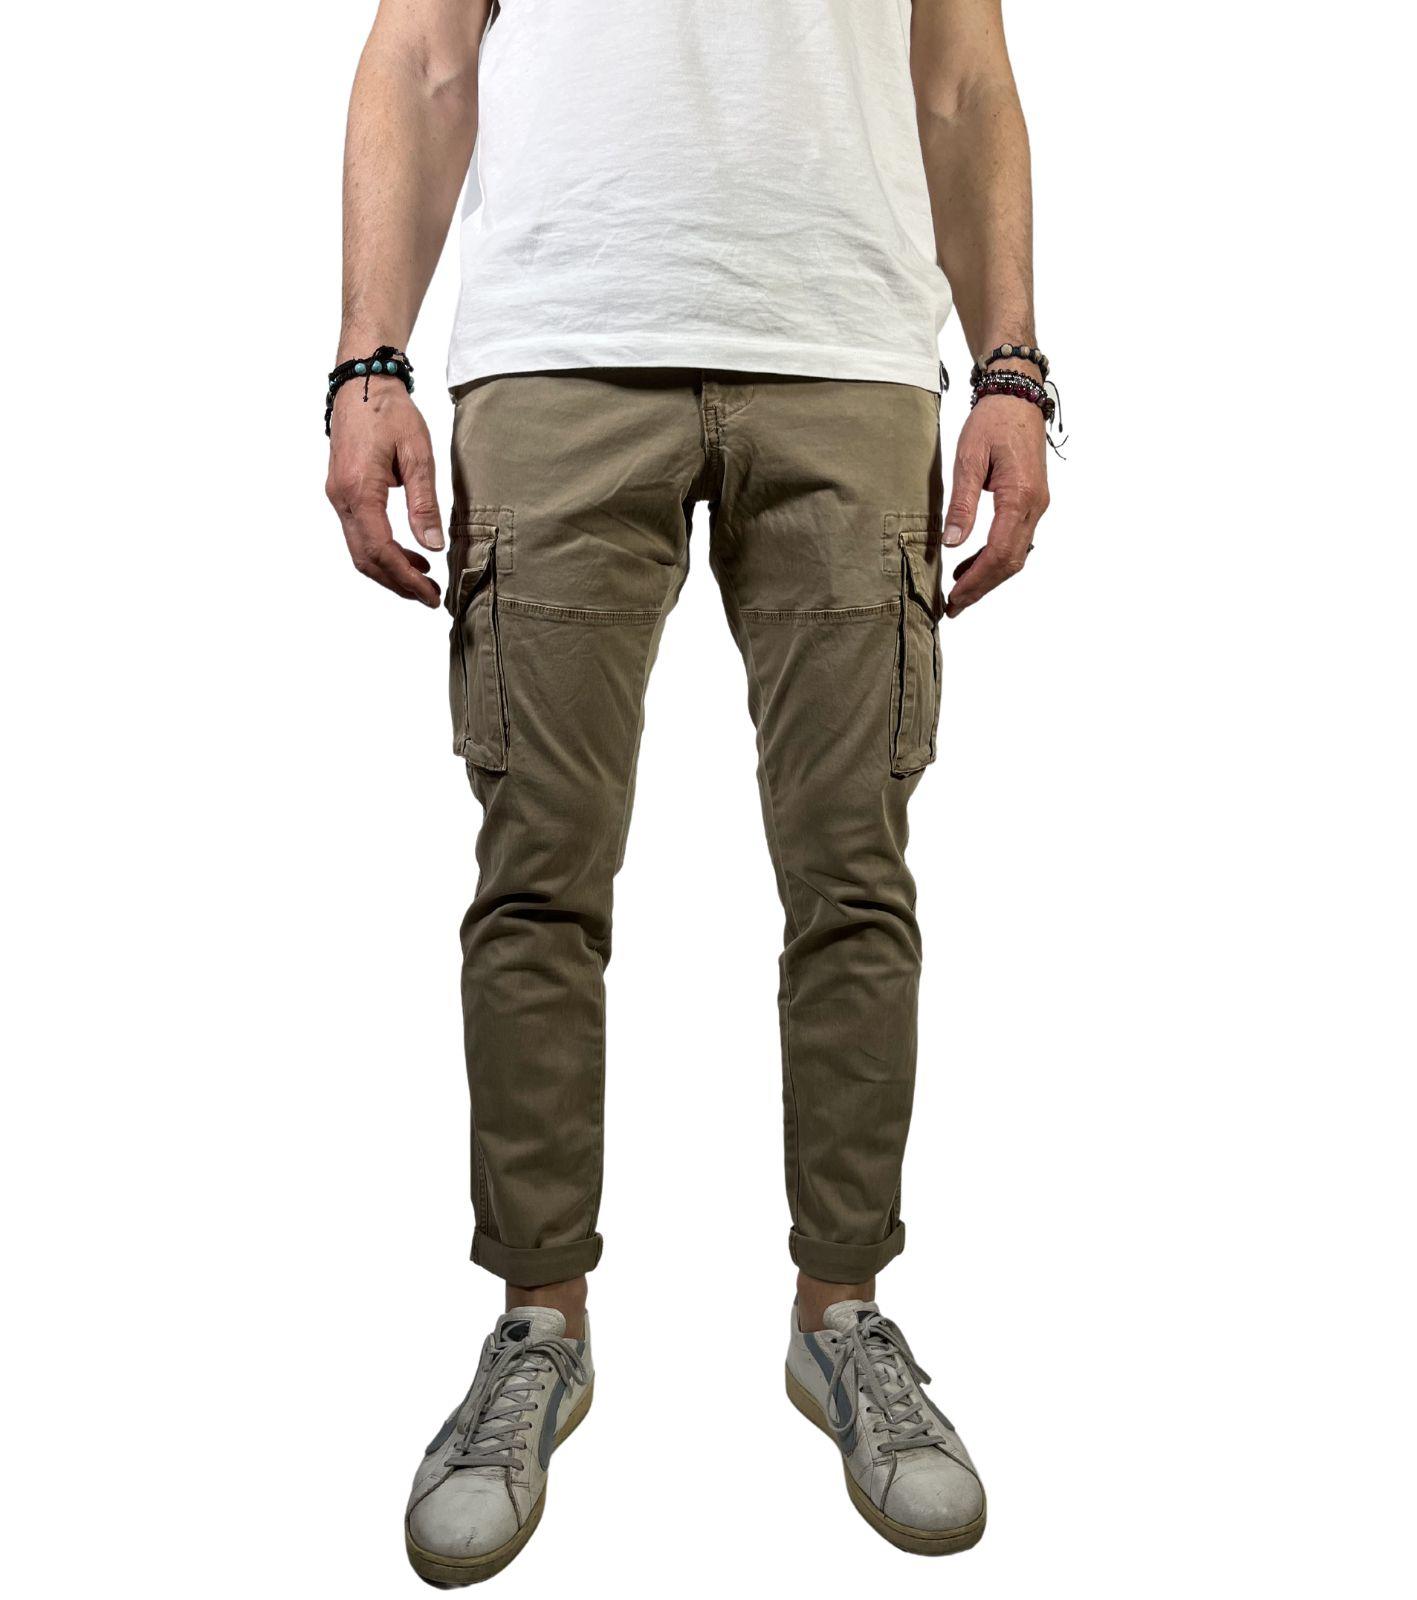 wholesale men's slim fit dress pants| Alibaba.com